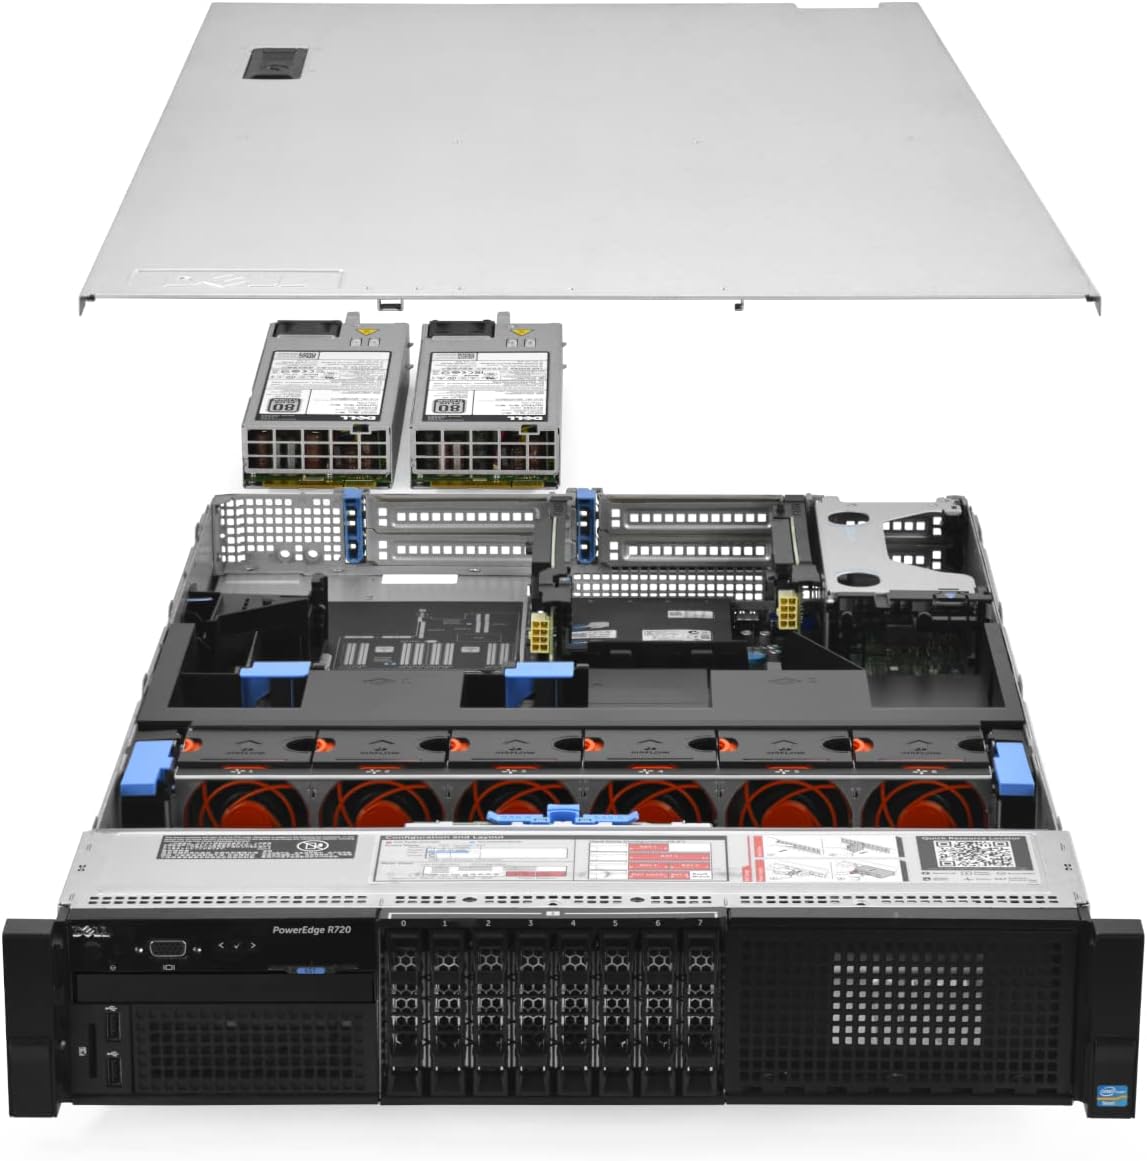 “Dell PowerEdge R720 Server: Reliable Performance for Enterprise Environments”